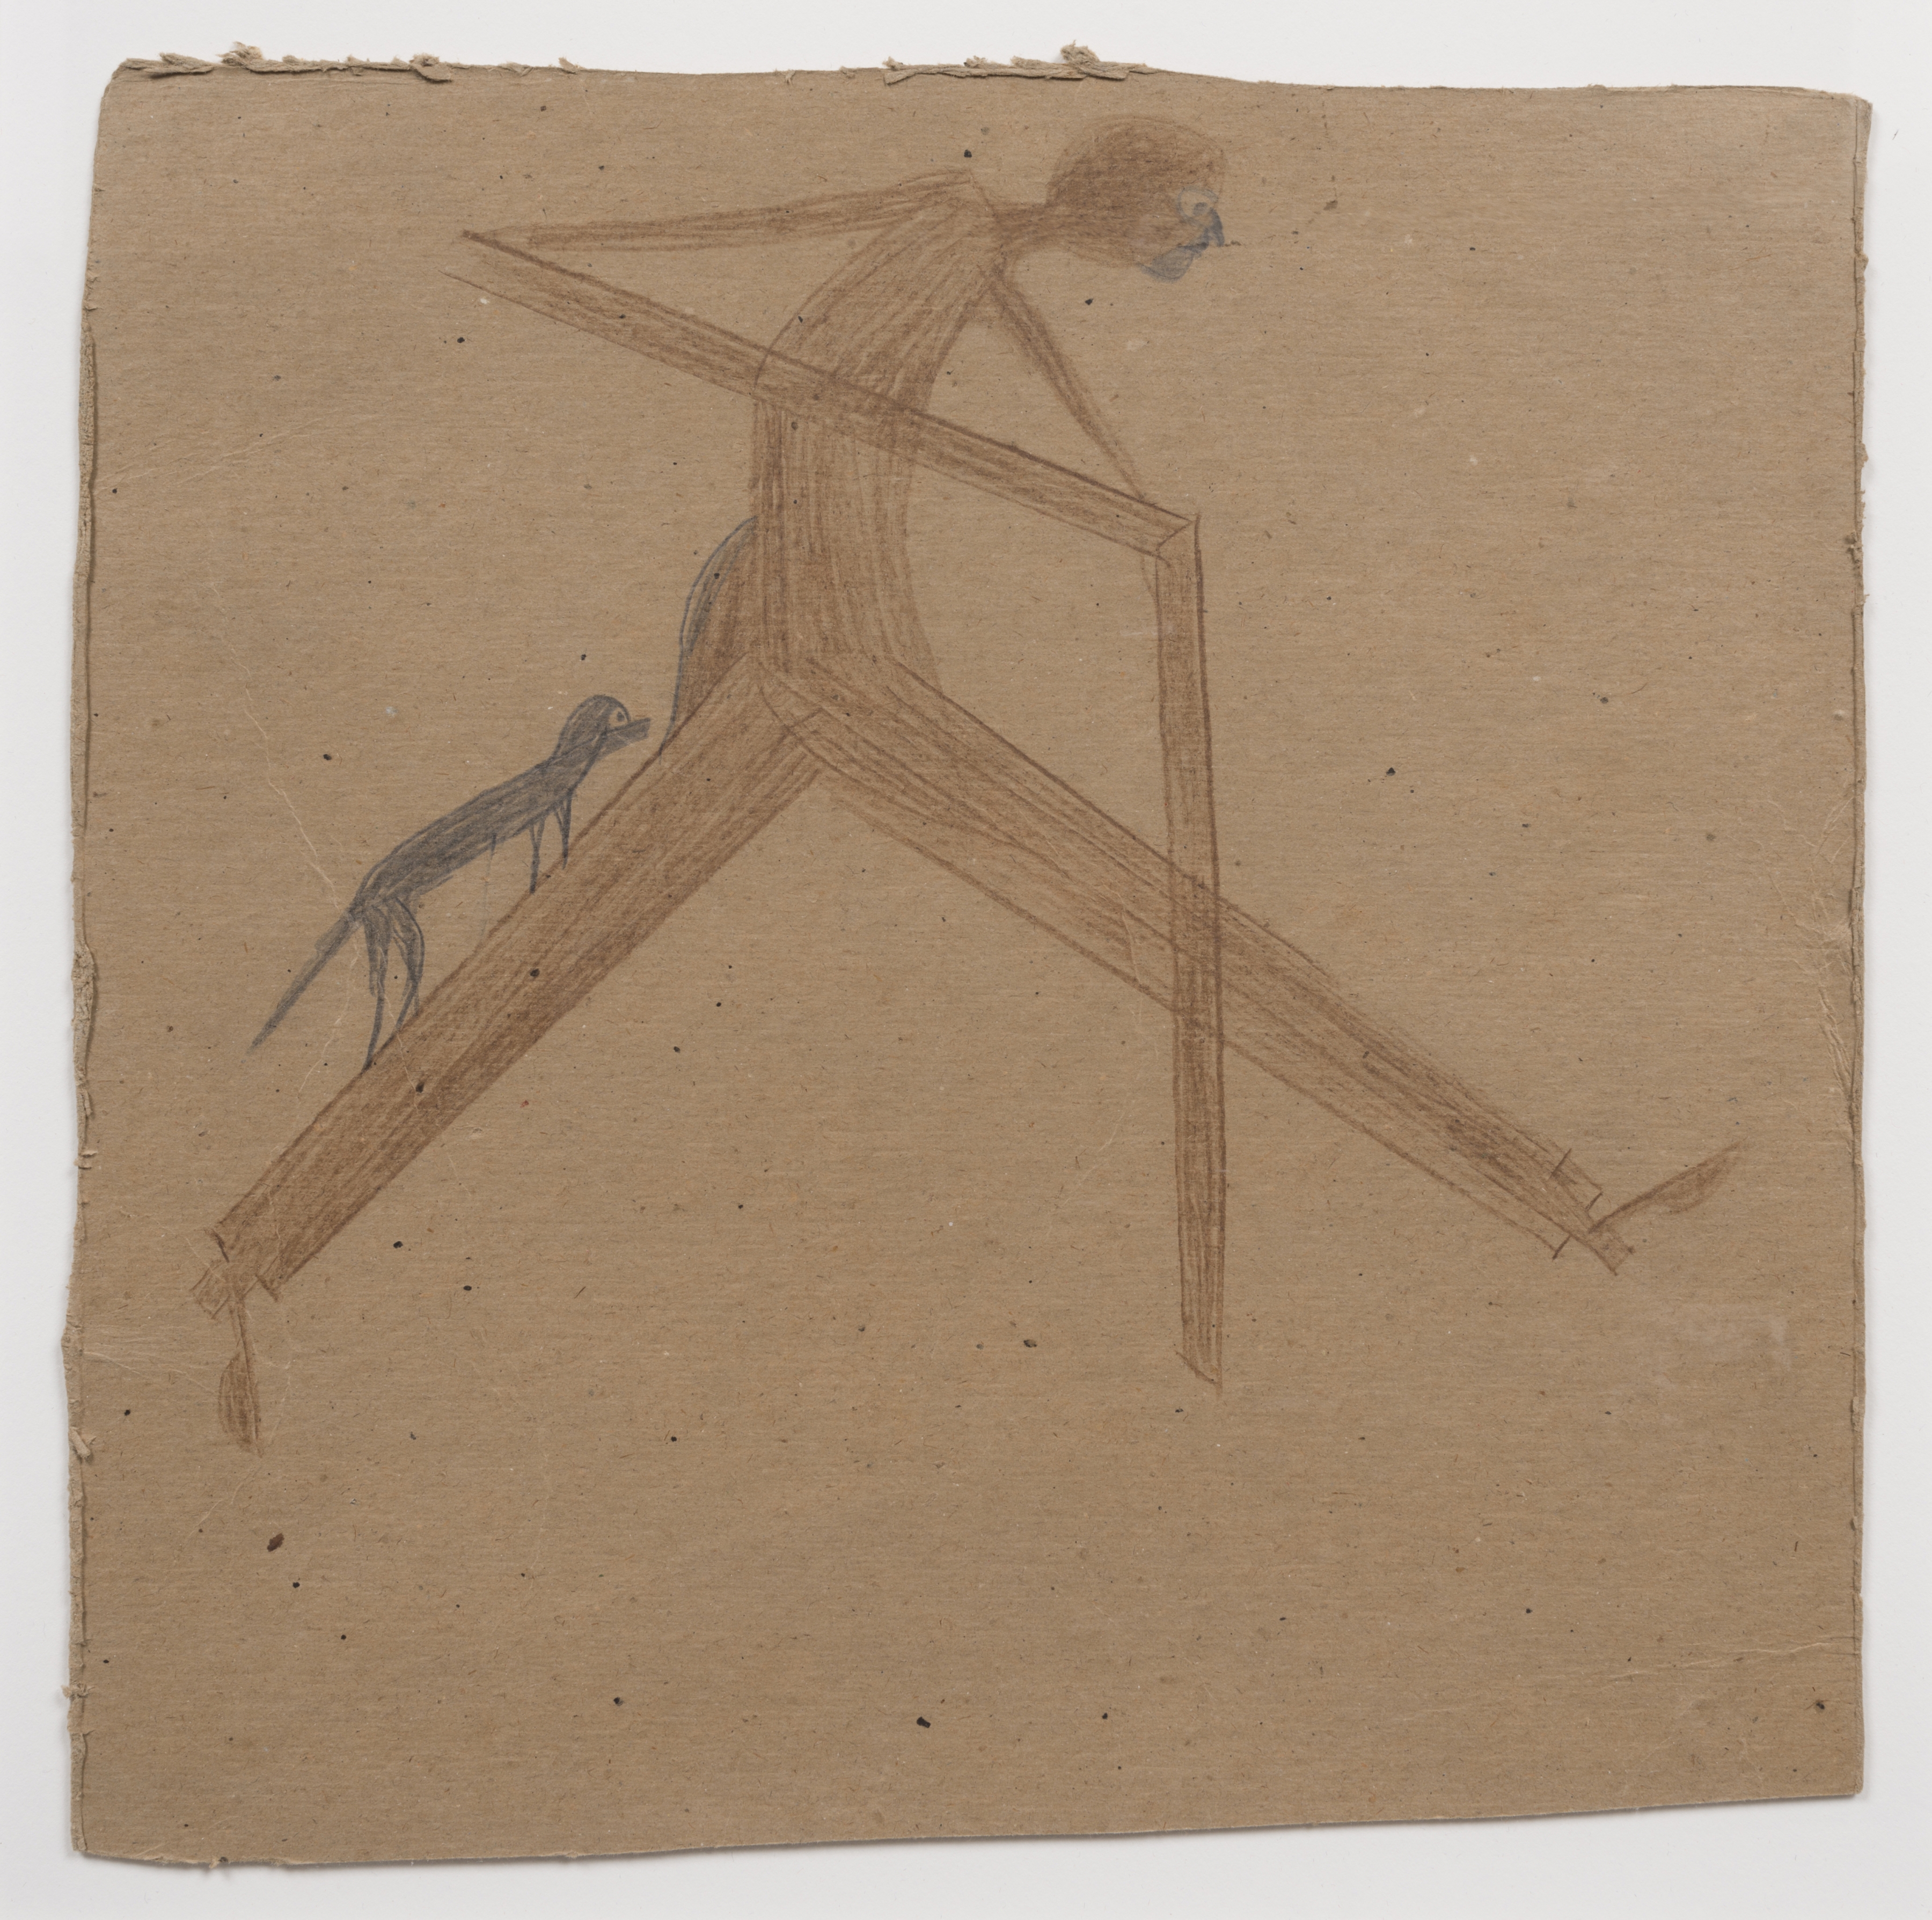 Bill Traylor,&amp;nbsp;Man Walking Dog, 1939&amp;ndash;42;&amp;nbsp;colored pencil on cardboard,&amp;nbsp;12h x 12w in/&amp;nbsp;30.48h x 30.48w cm

Inquire